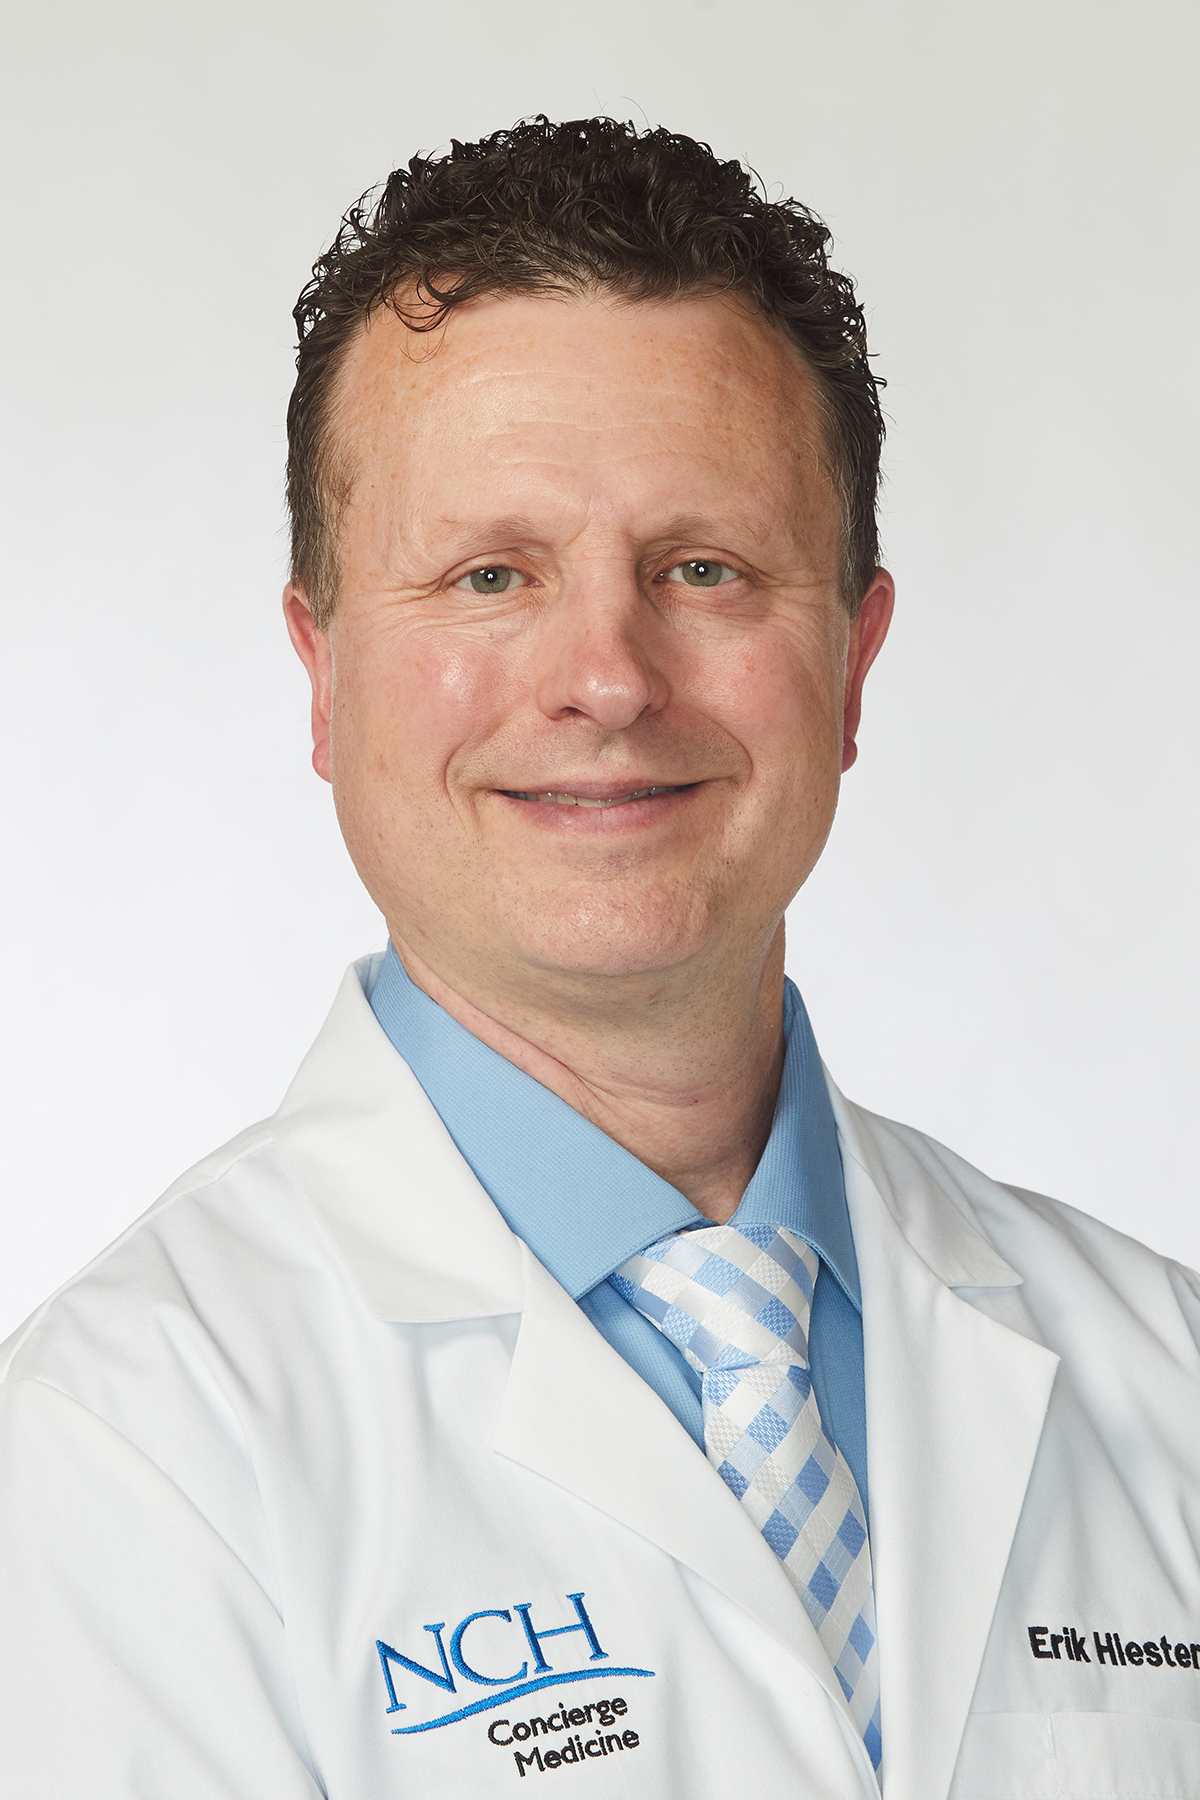 Dr. Erik Hiester